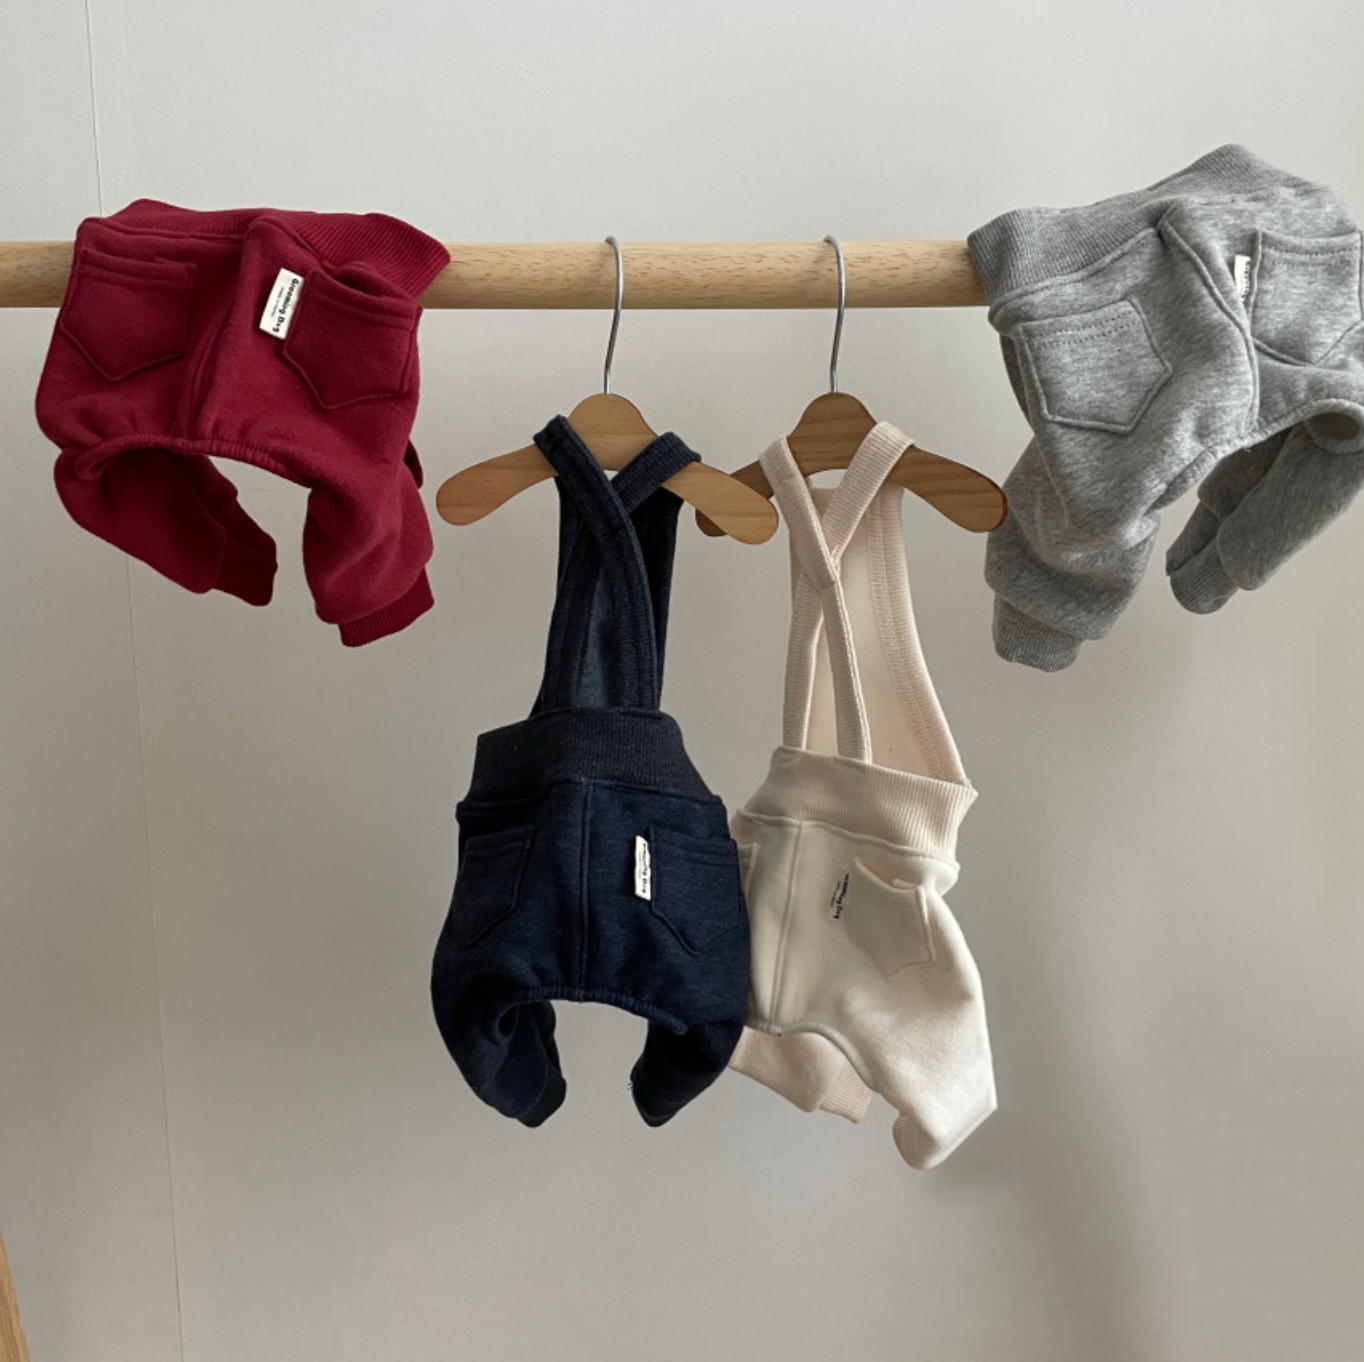 Daily Fleece Sweatpants Onesie (4 colors)